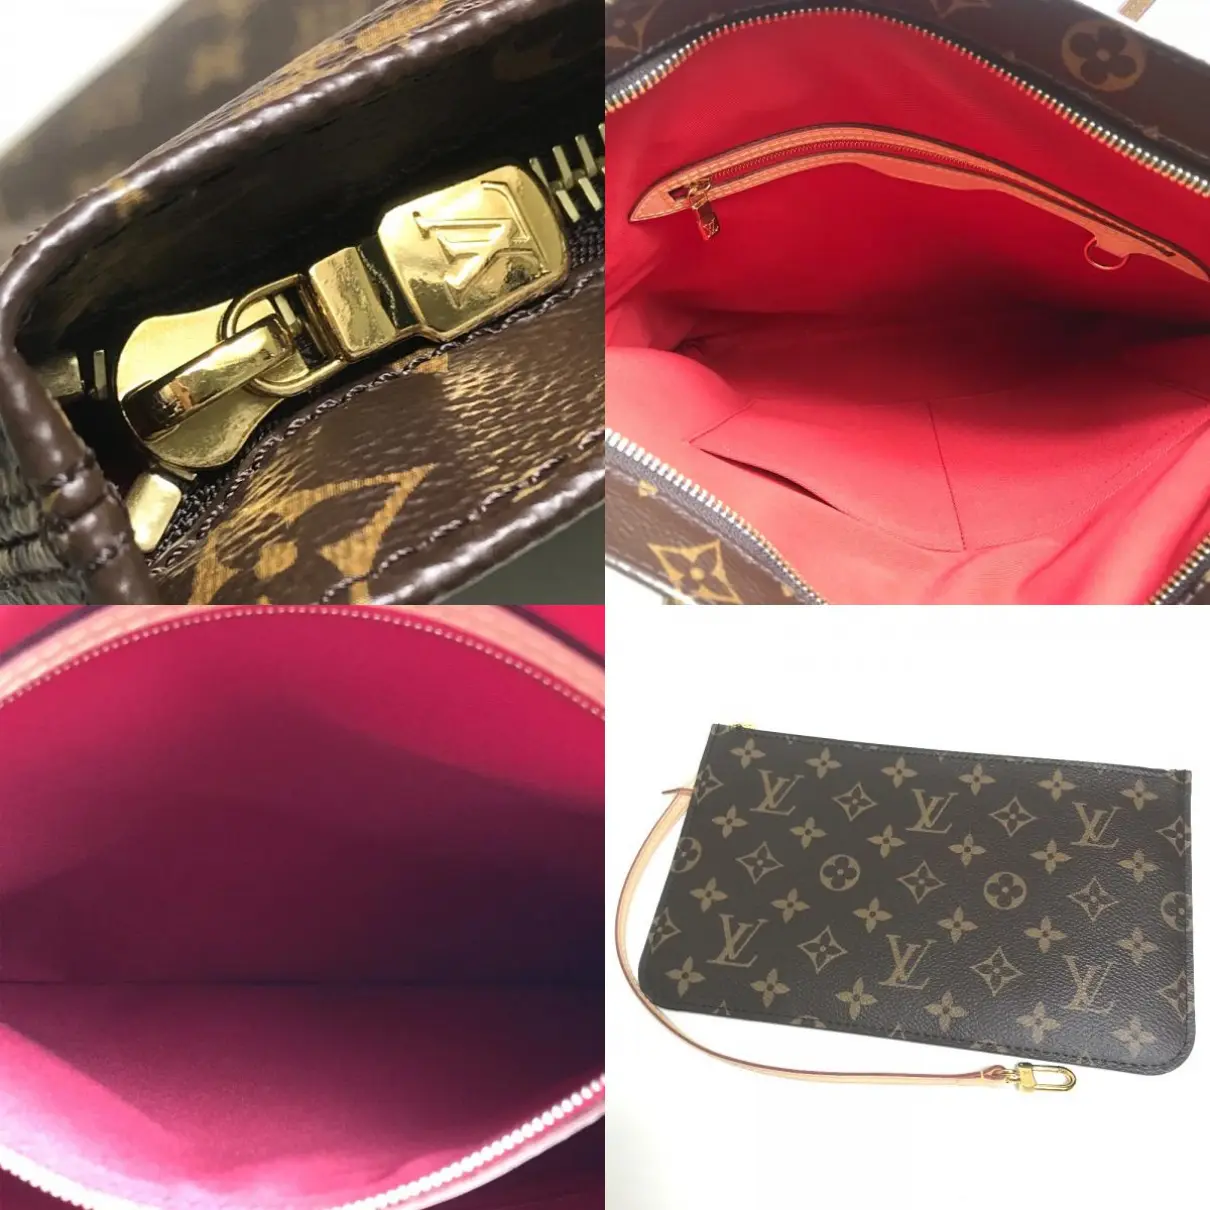 Carry it cloth handbag Louis Vuitton